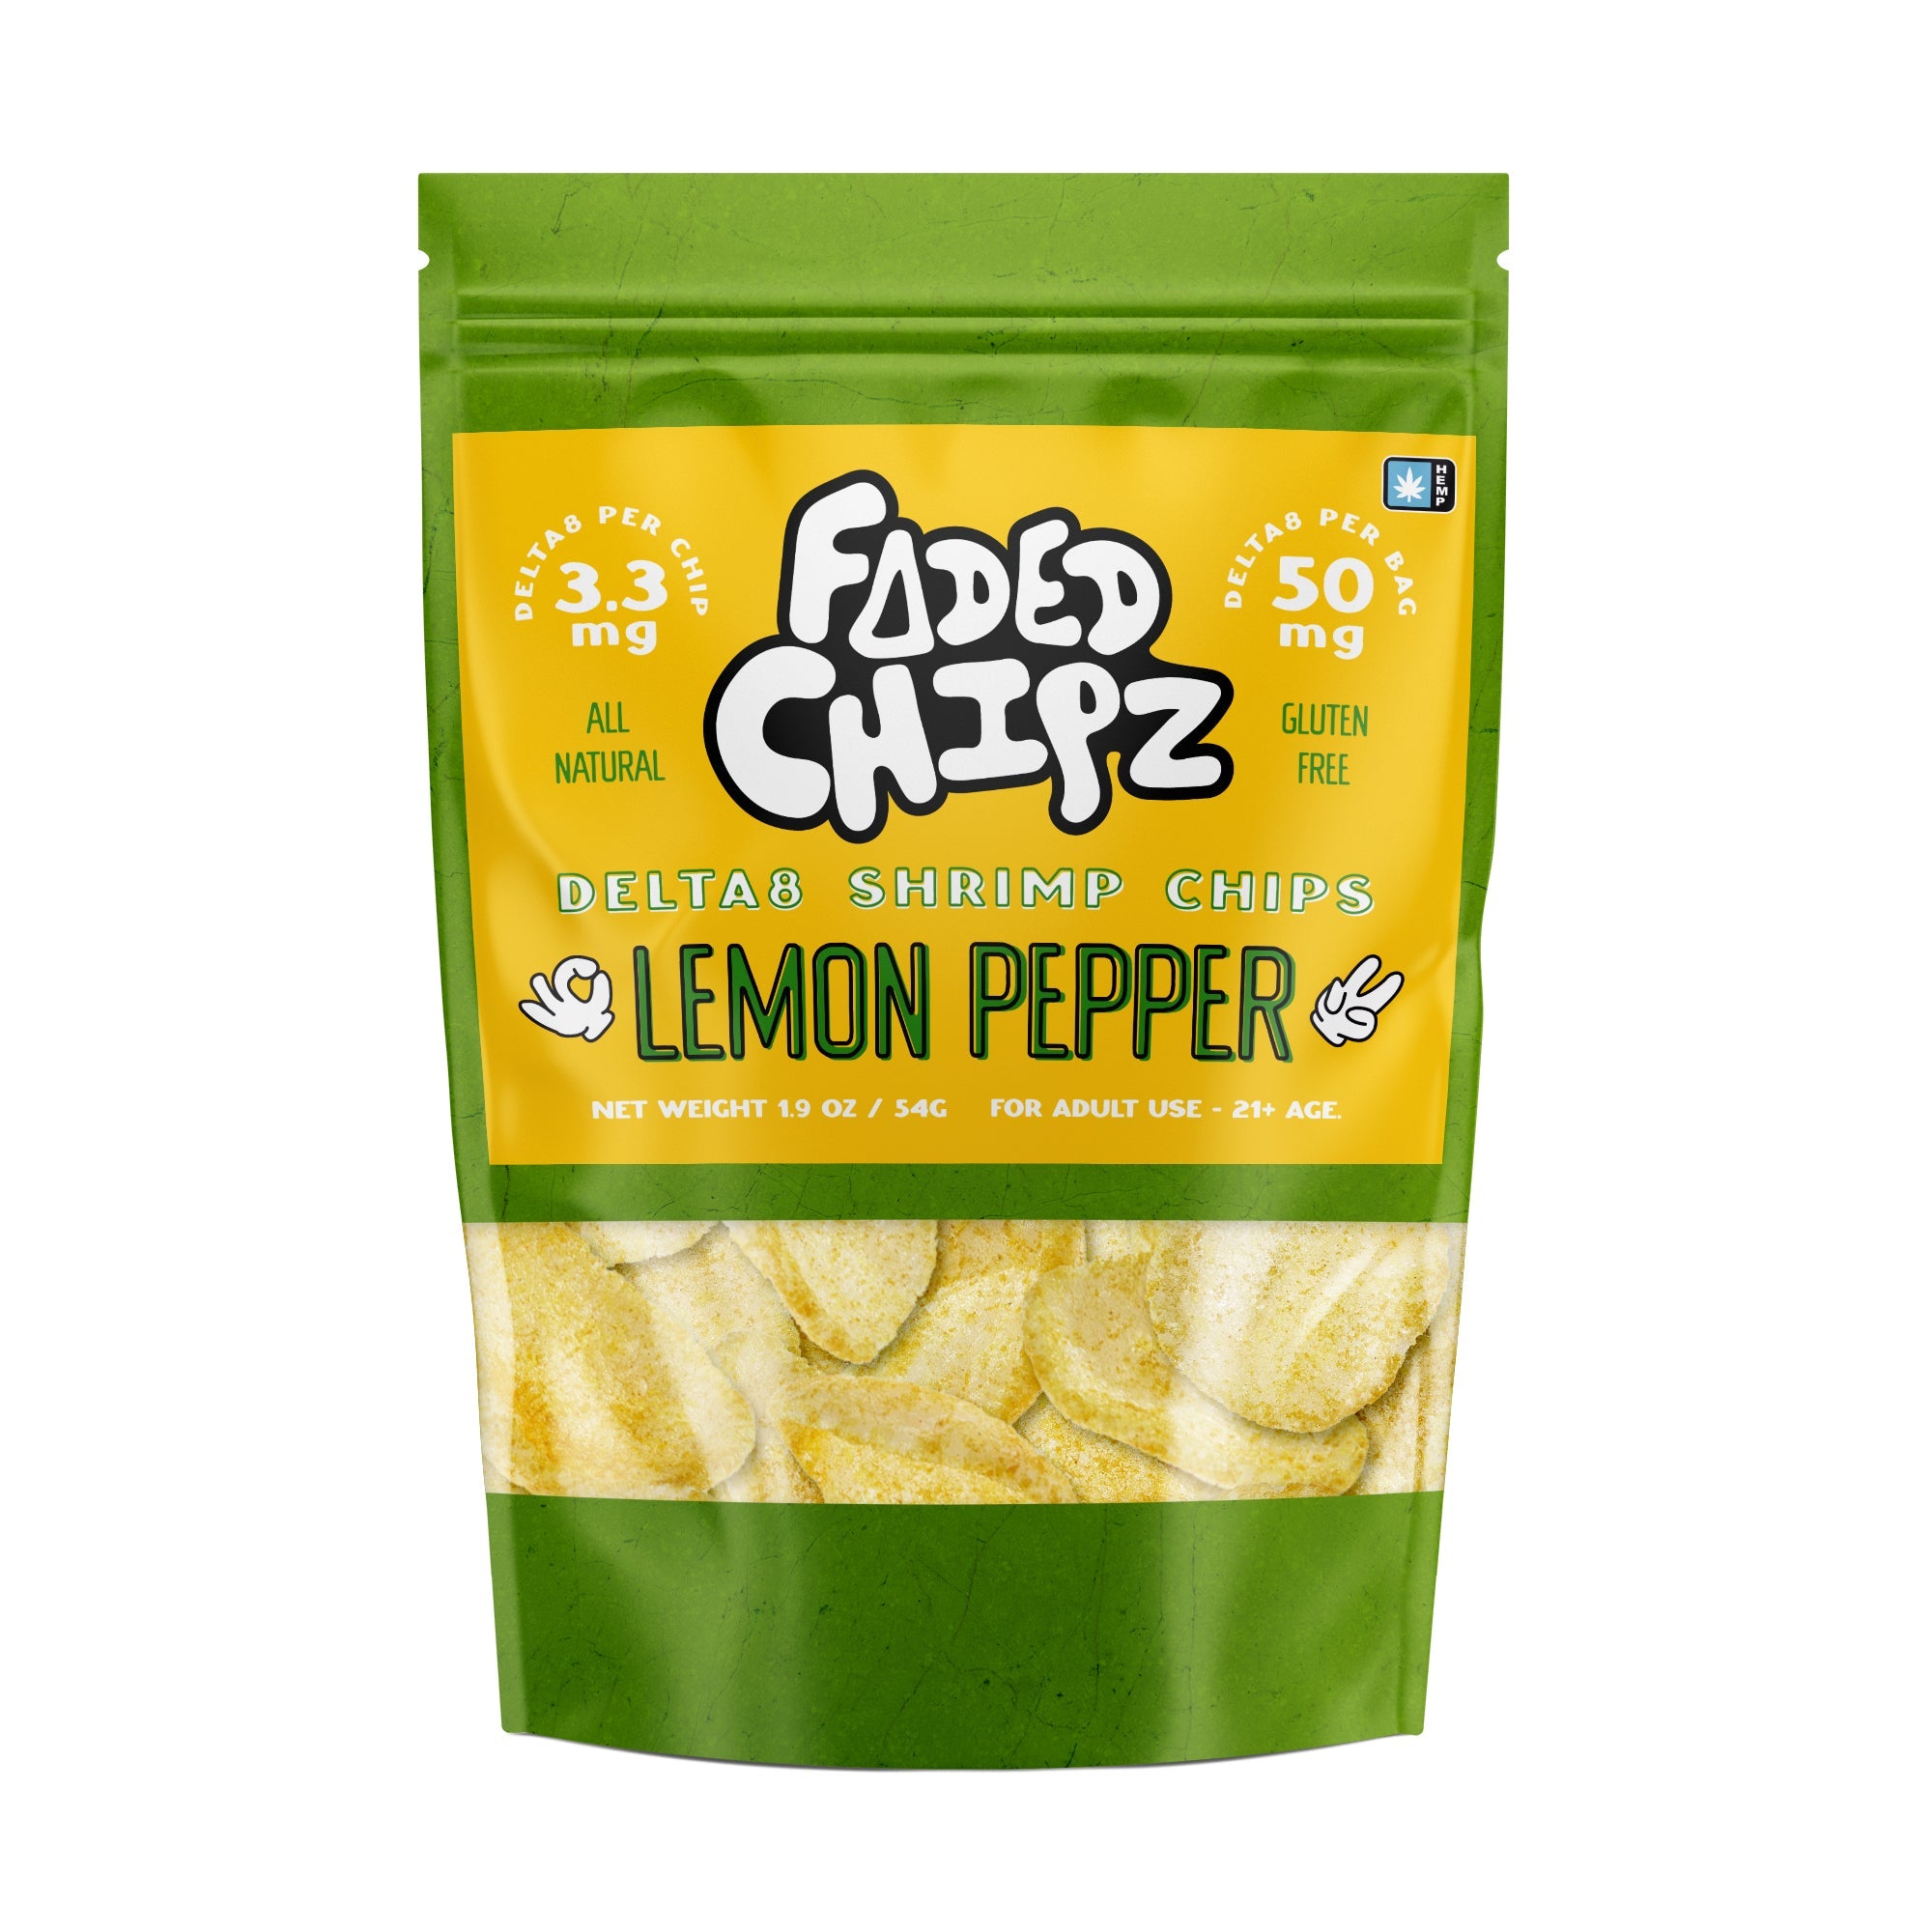 Faded Chipz Delta8 Shrimp Chips 50mg - Lemon Pepper (Unit)